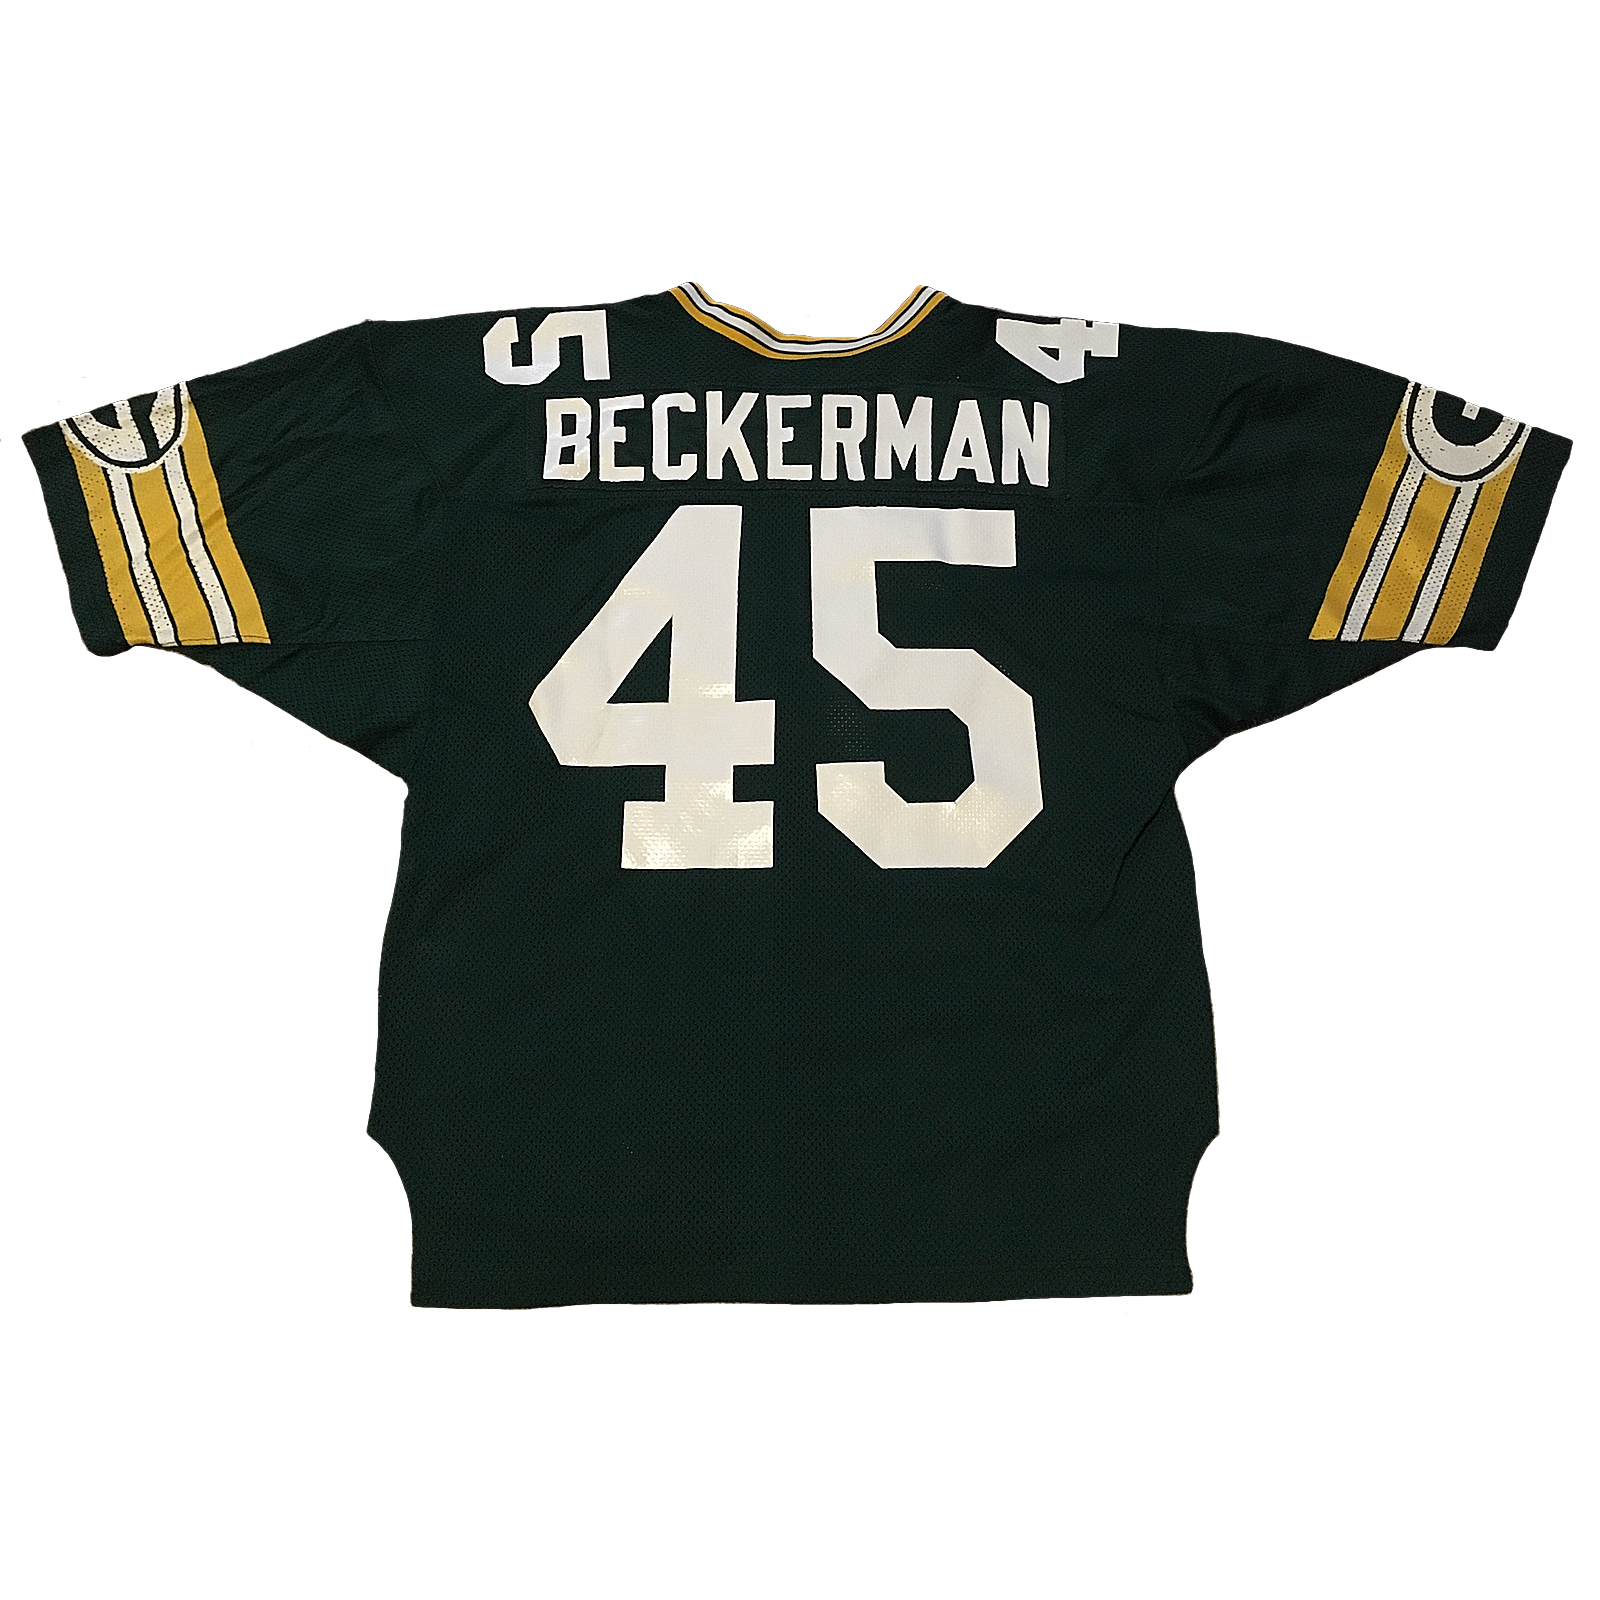 beckerman jersey